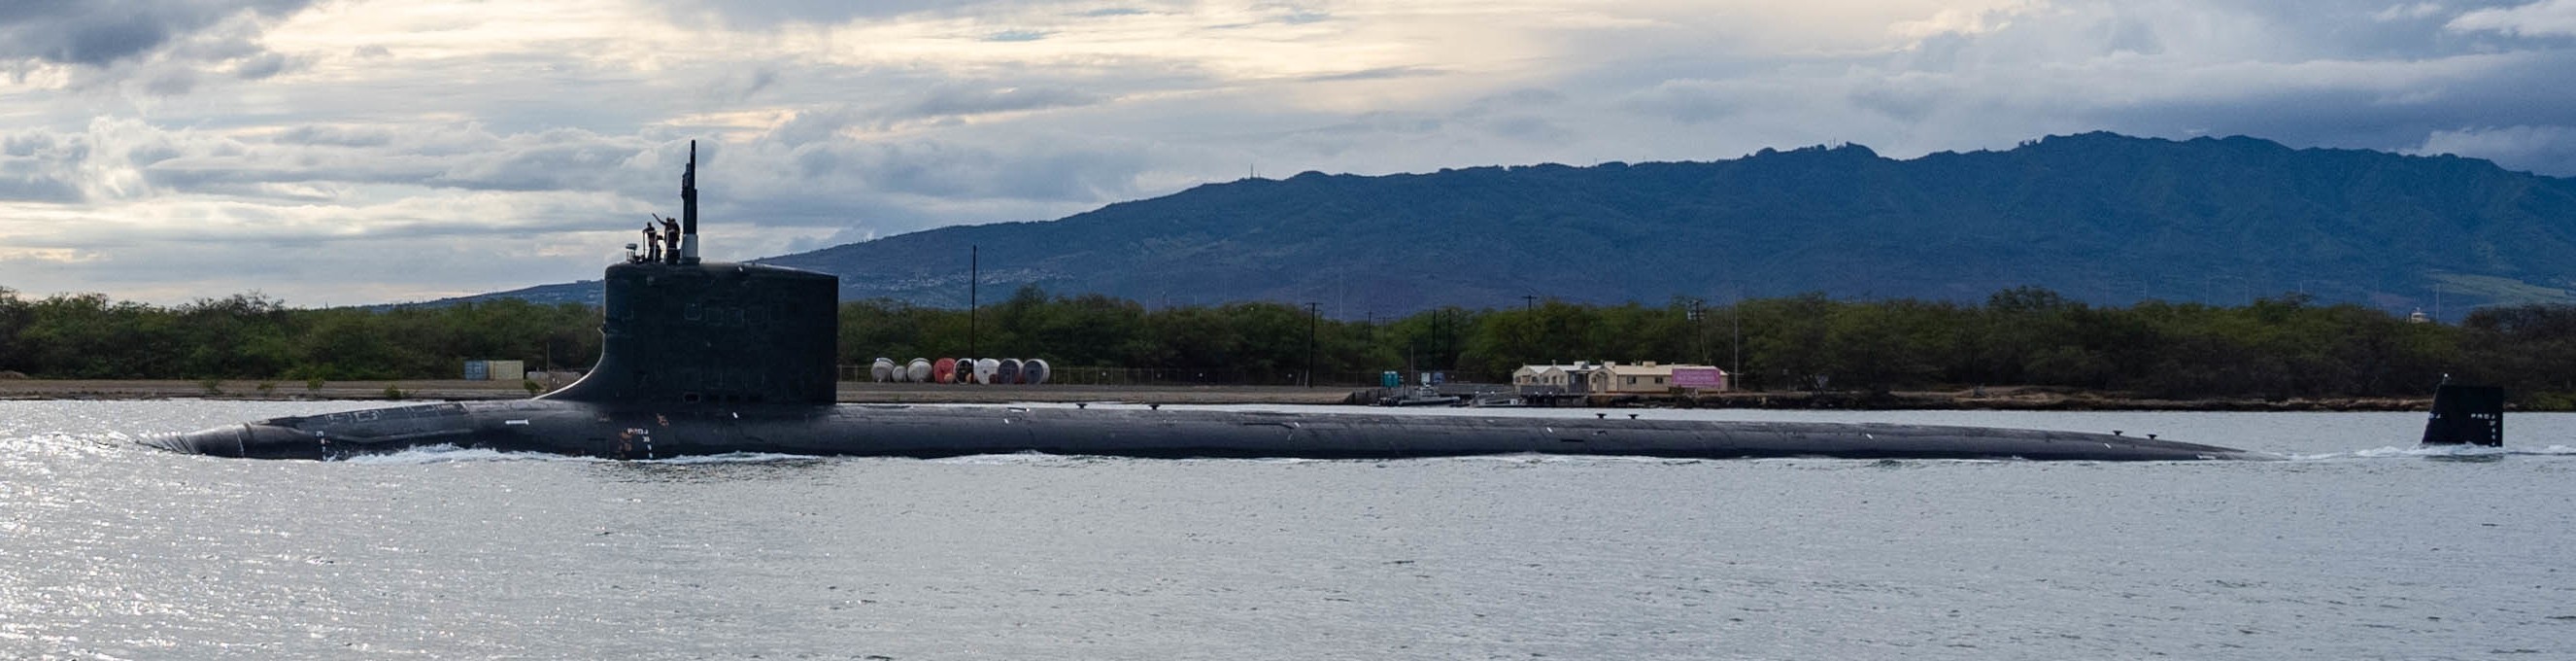 ssn-780 uss missouri virginia class attack submarine us navy 62 departing pearl harbor hickam hawaii